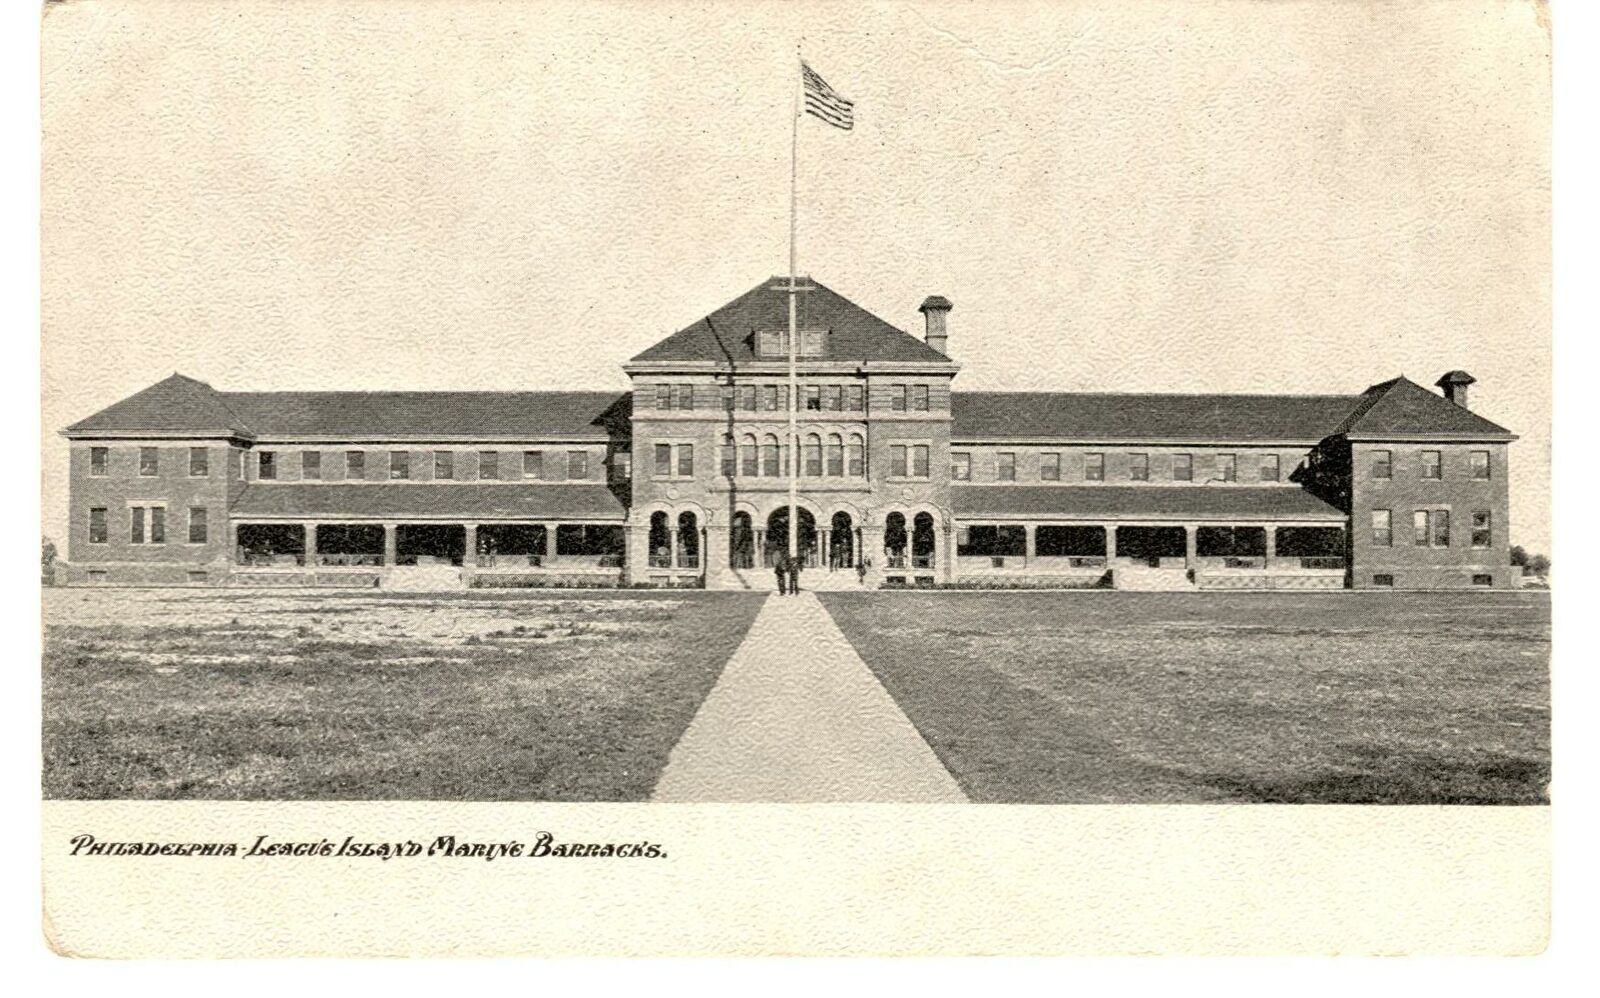 Postcard Philadelphia League Island Marine Barracks PA 